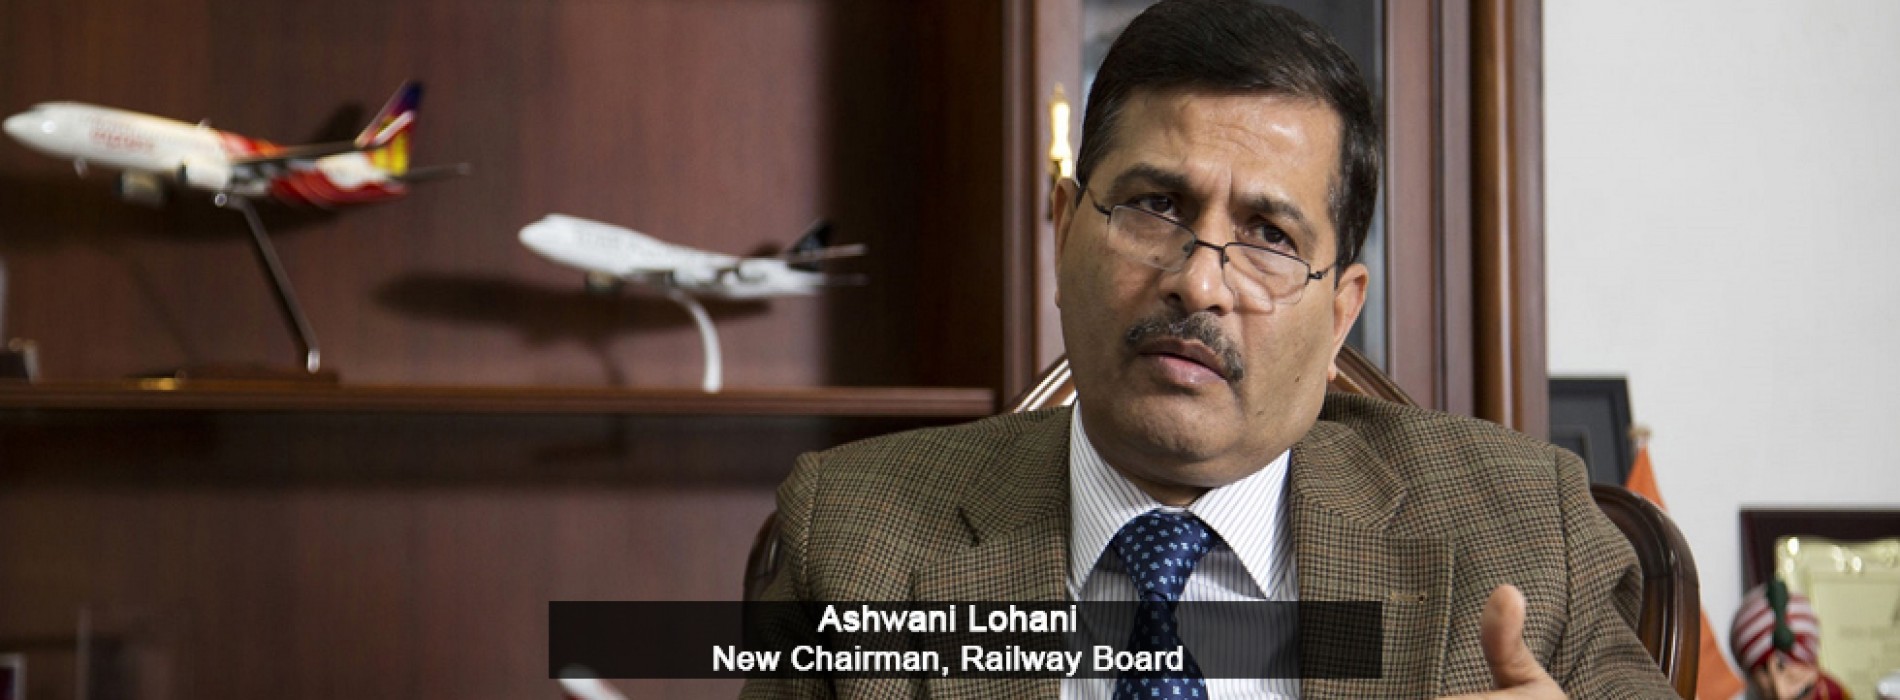 Air India Chief Ashwani Lohani to head Railway Board